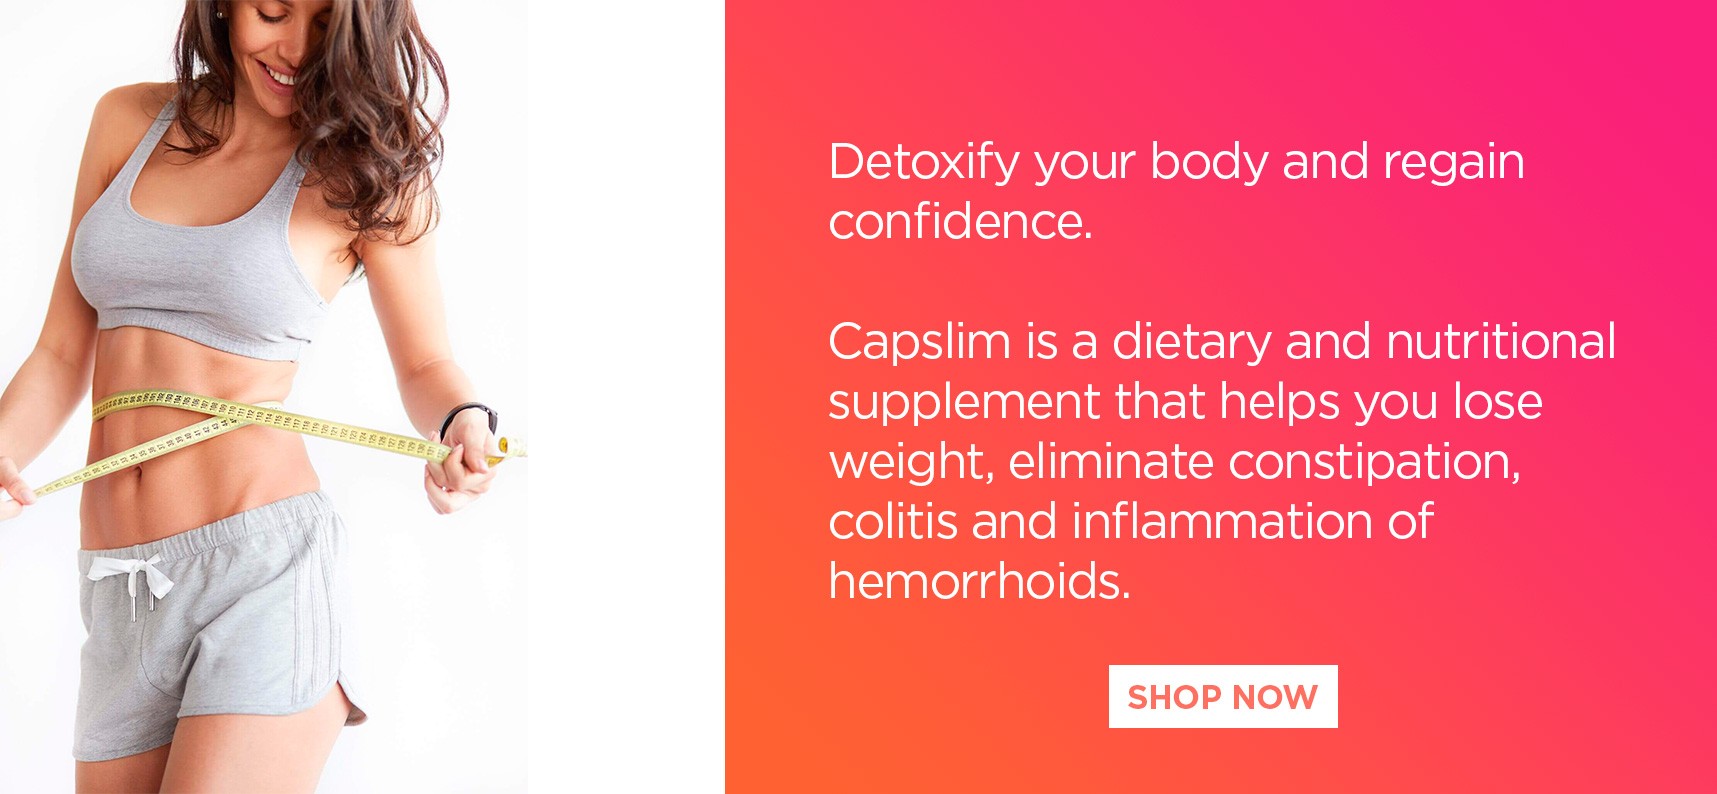 Detoxify your body and regain confidence.